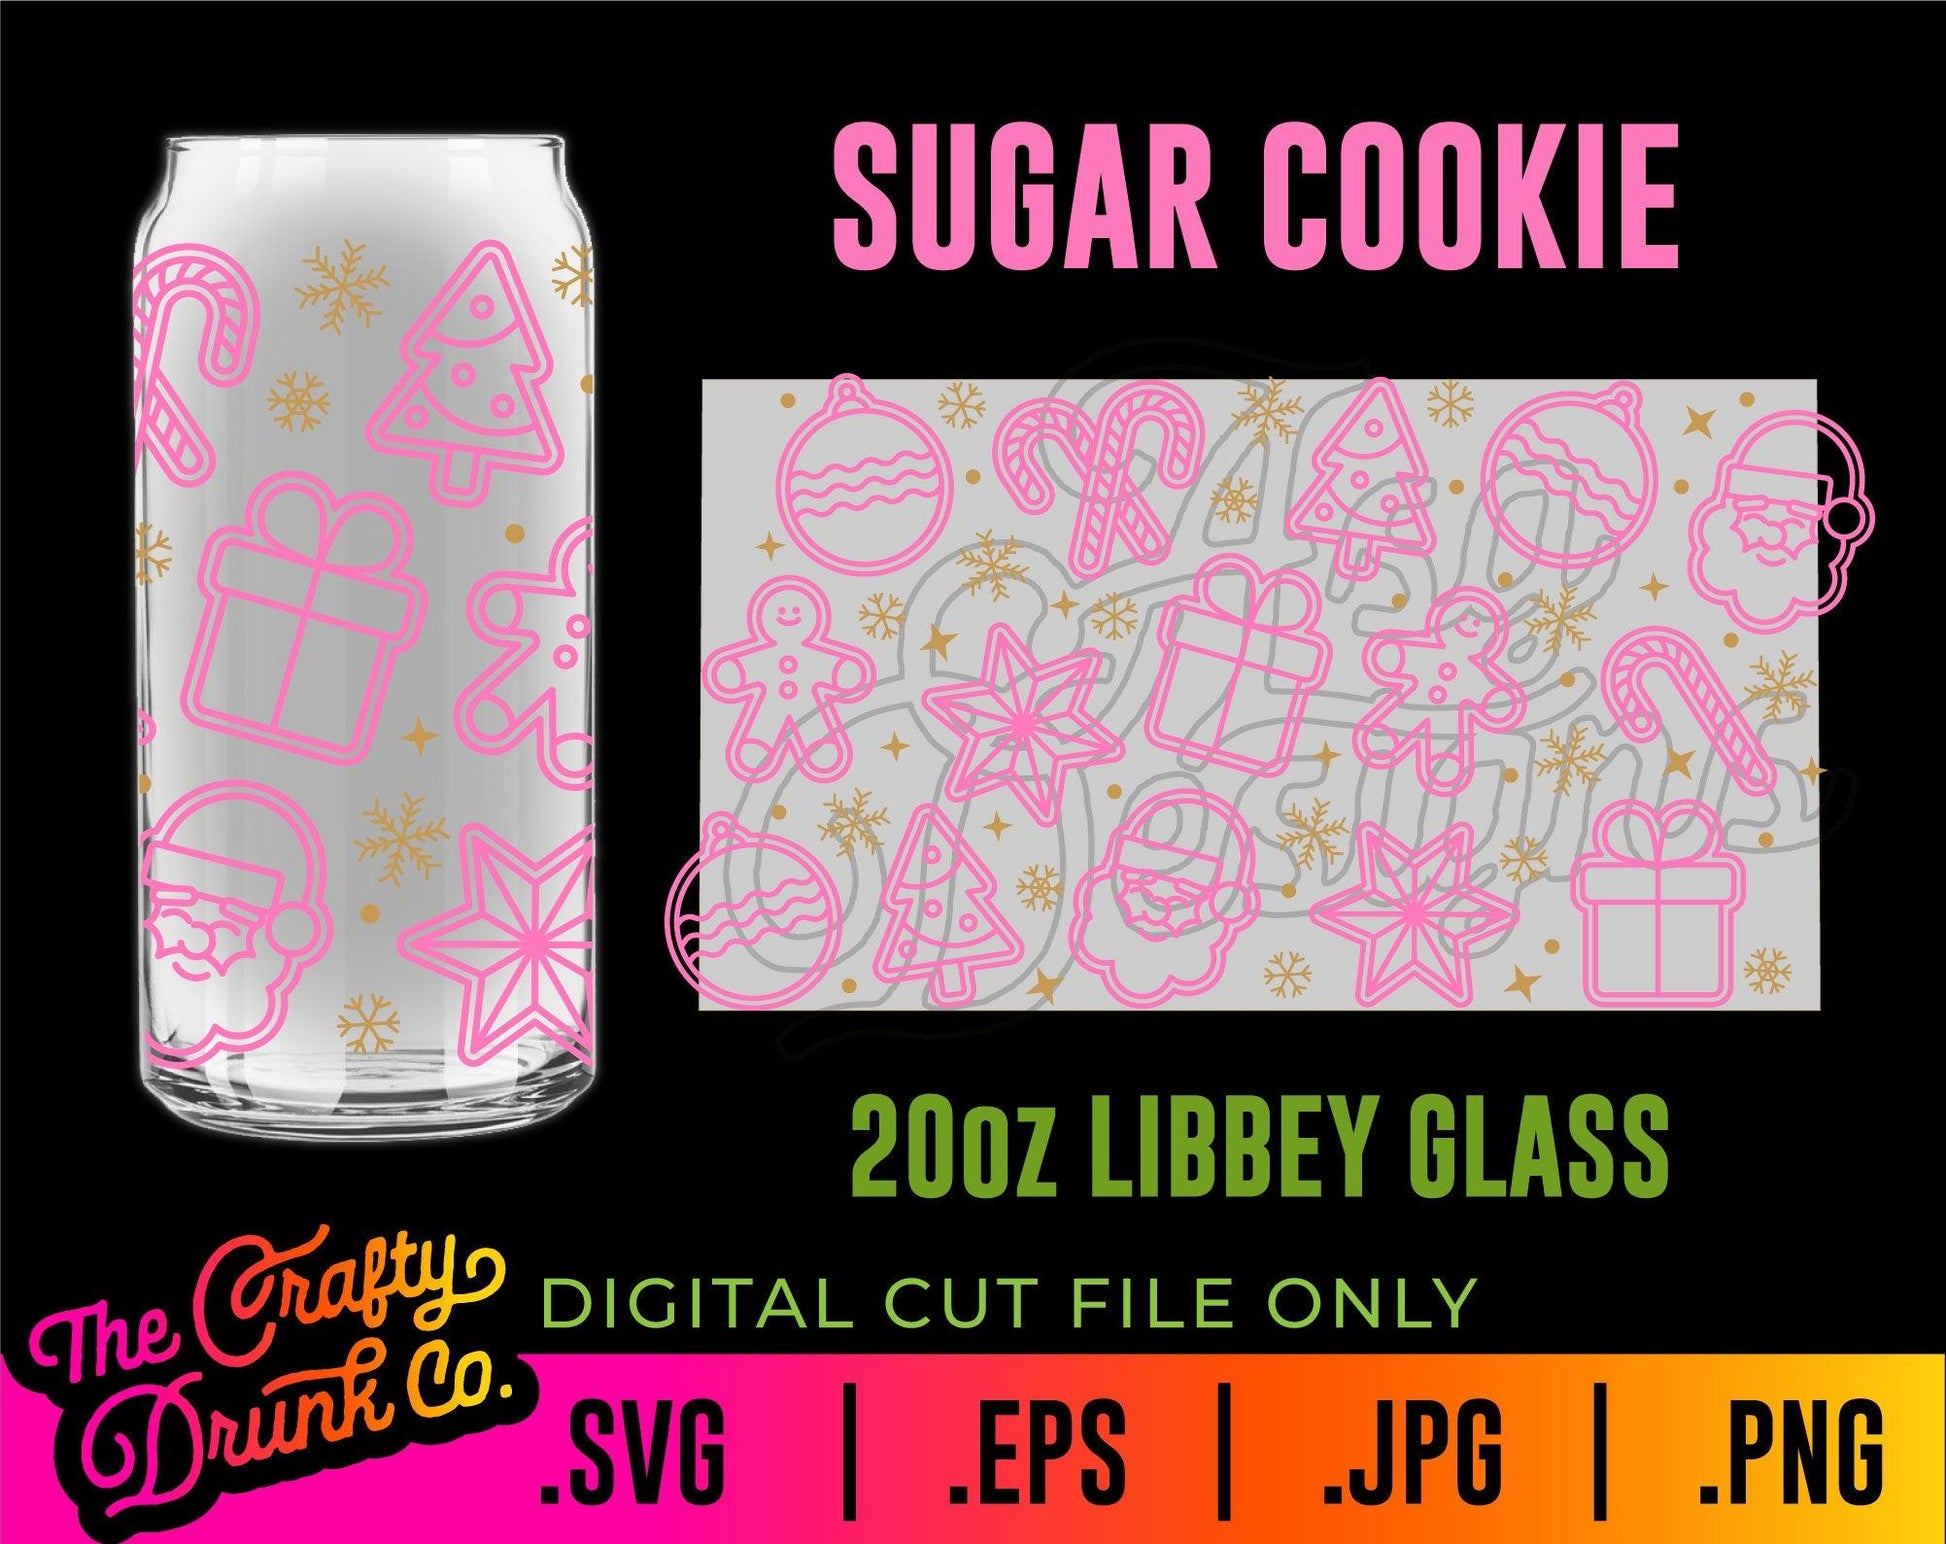 Sugar Cookie Libbey Can Glass Wraps 16oz and 20oz - TheCraftyDrunkCo